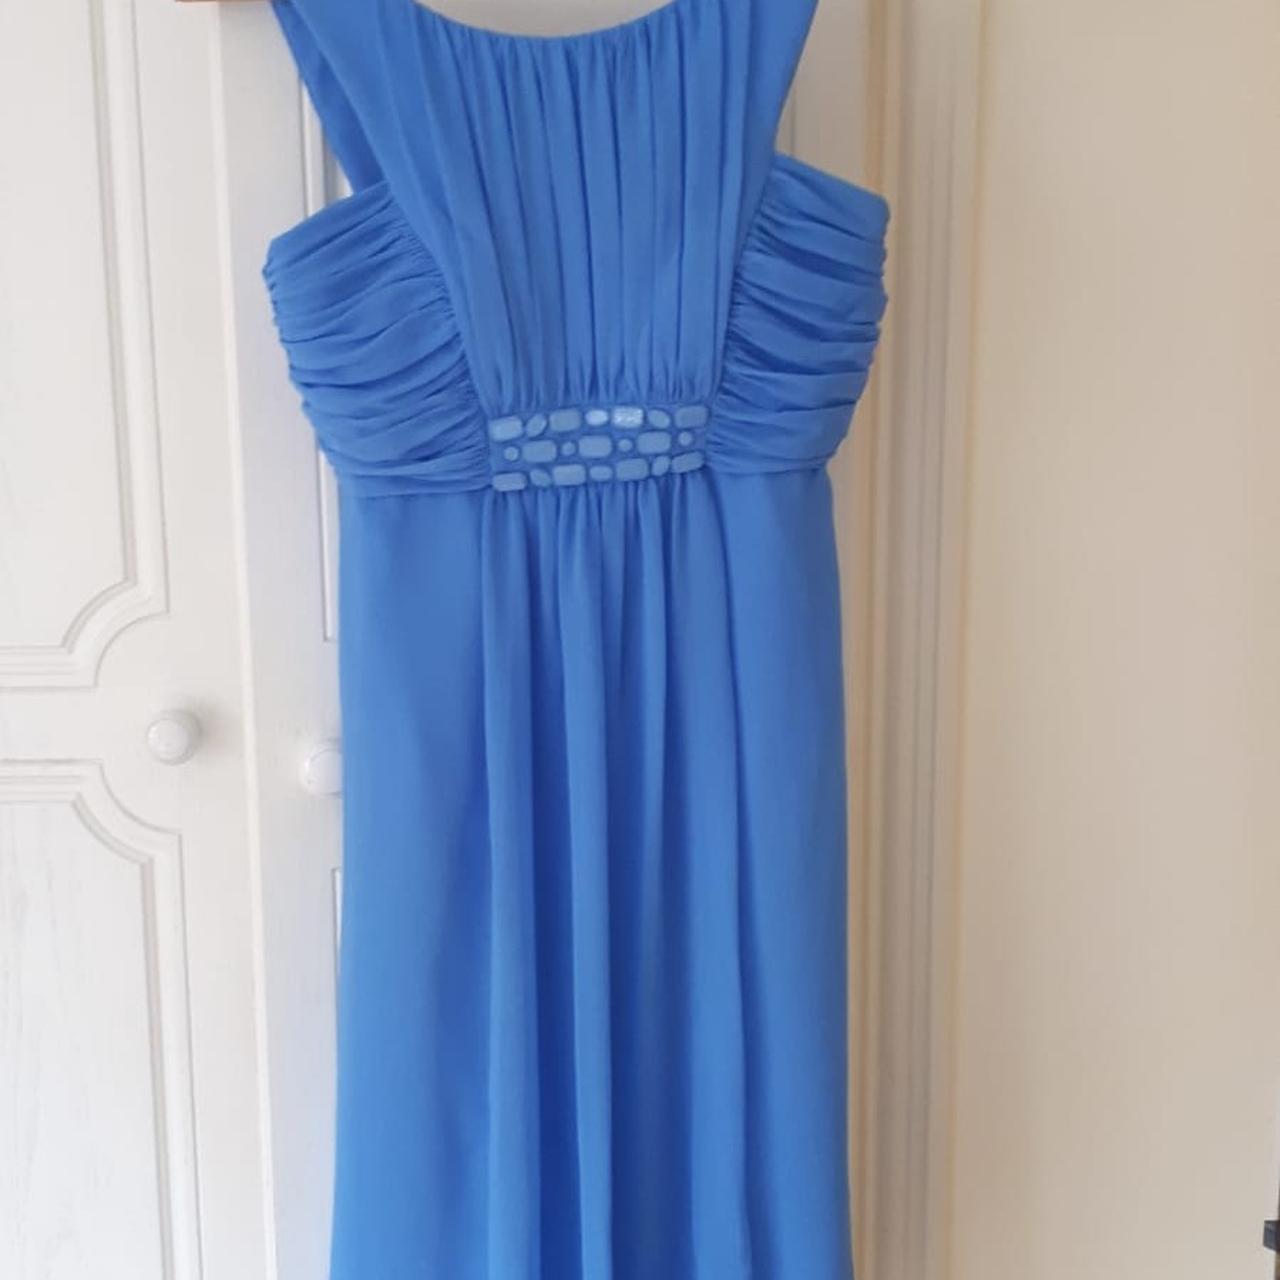 Stunning cornflower blue dress and ...